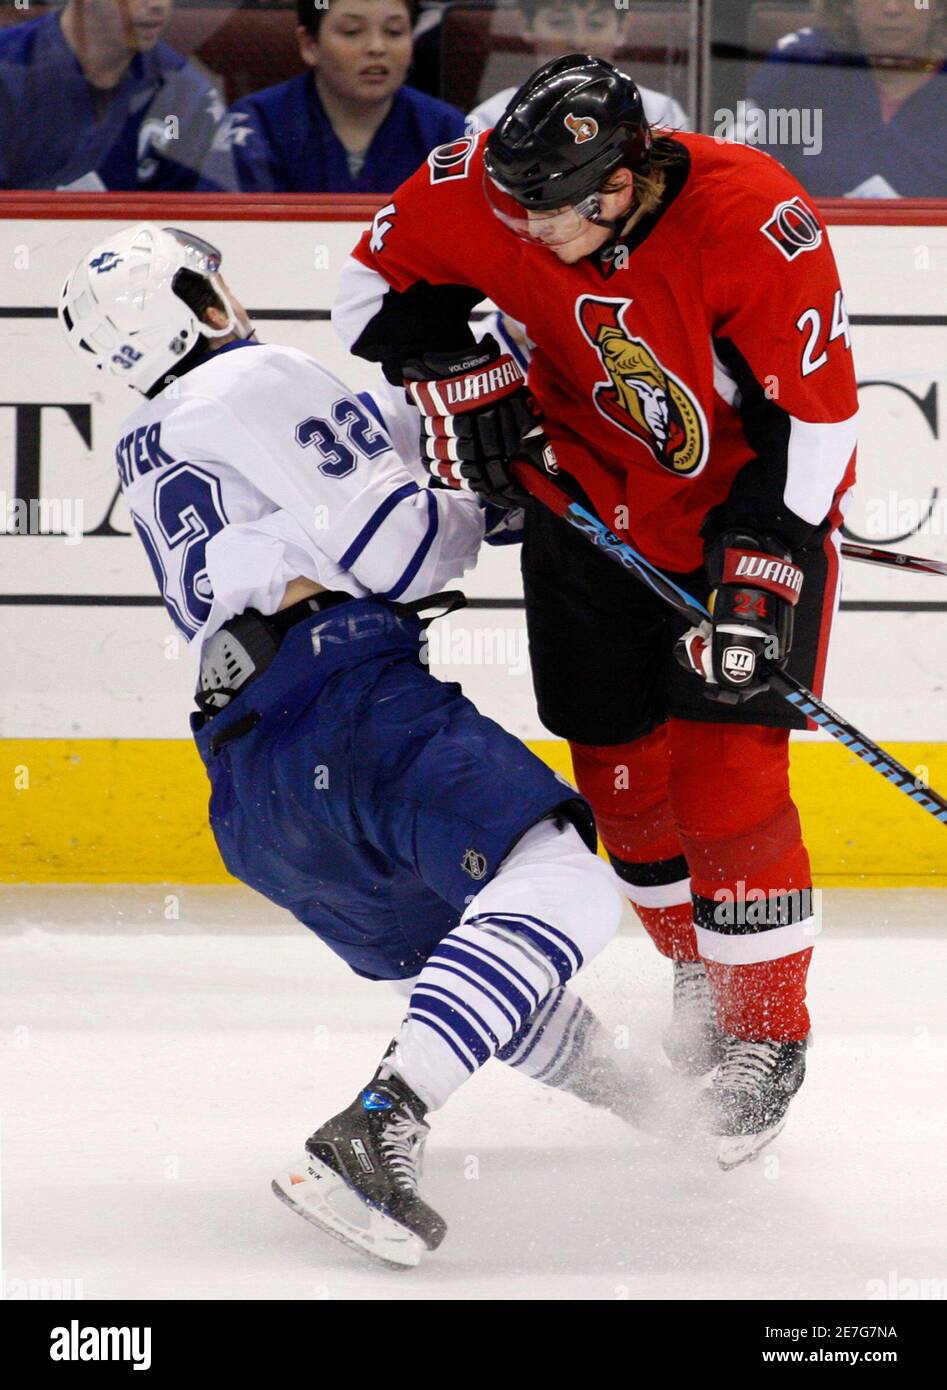 Ottawa Senators' Anton Volchenkov (R) hits Toronto Maple Leafs' Alex Foster during the first period of their NHL hockey game in Ottawa March 22, 2008.       REUTERS/Chris Wattie       (CANADA) Stock Photo